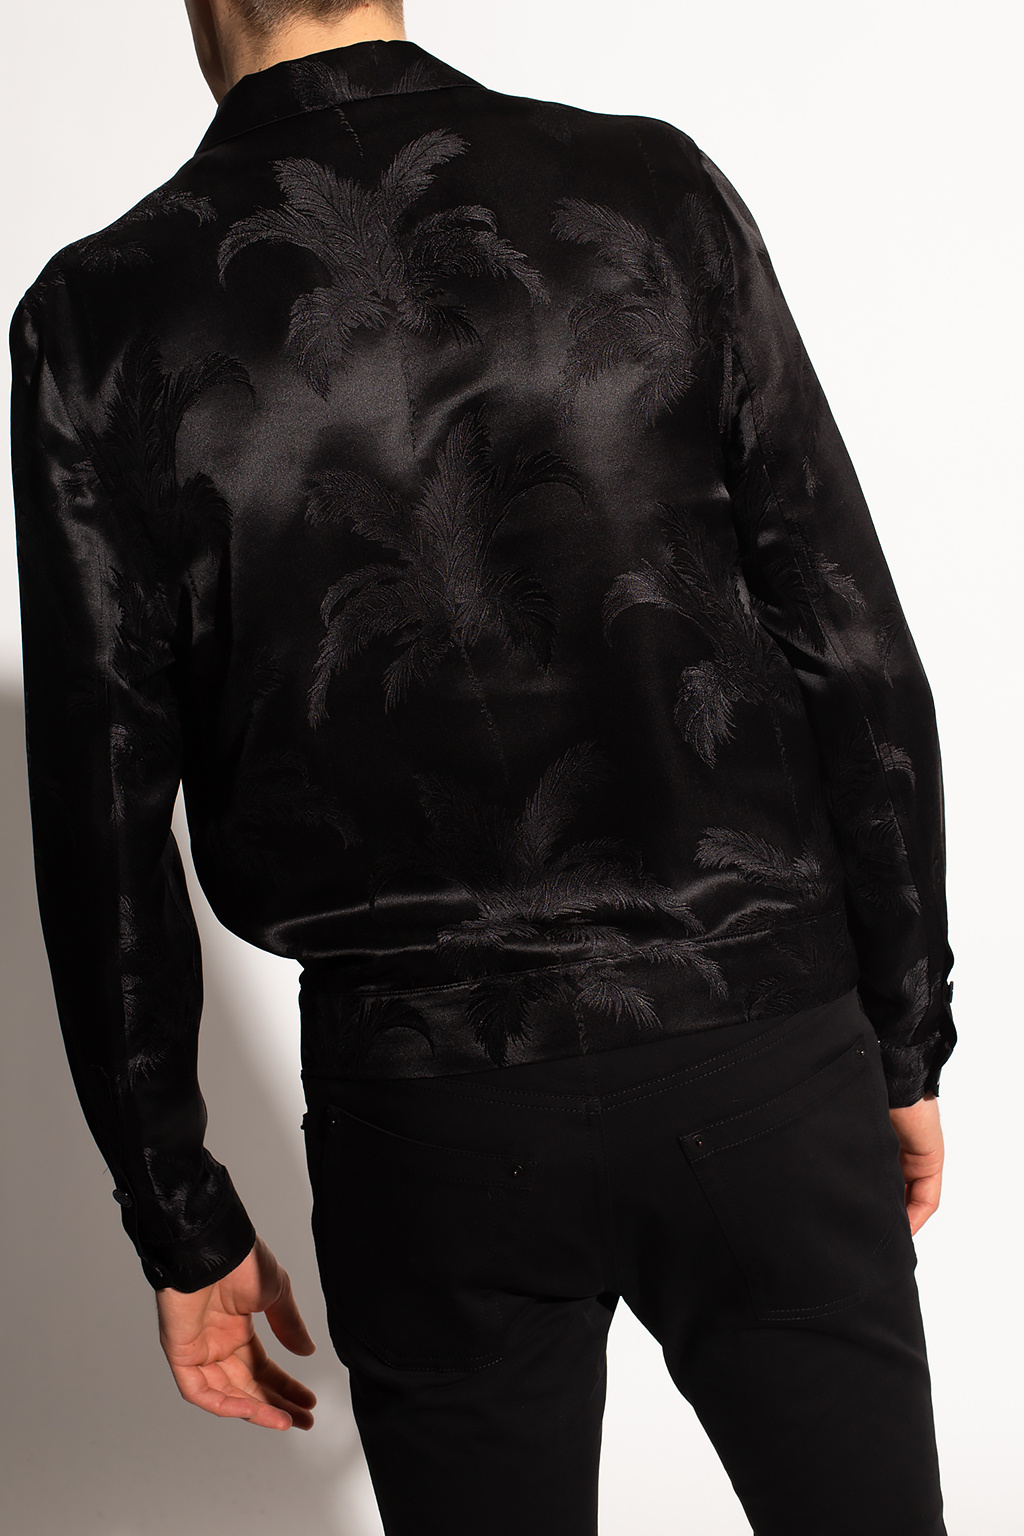 Saint Laurent Crocodile Embossed Jacket in Black for Men